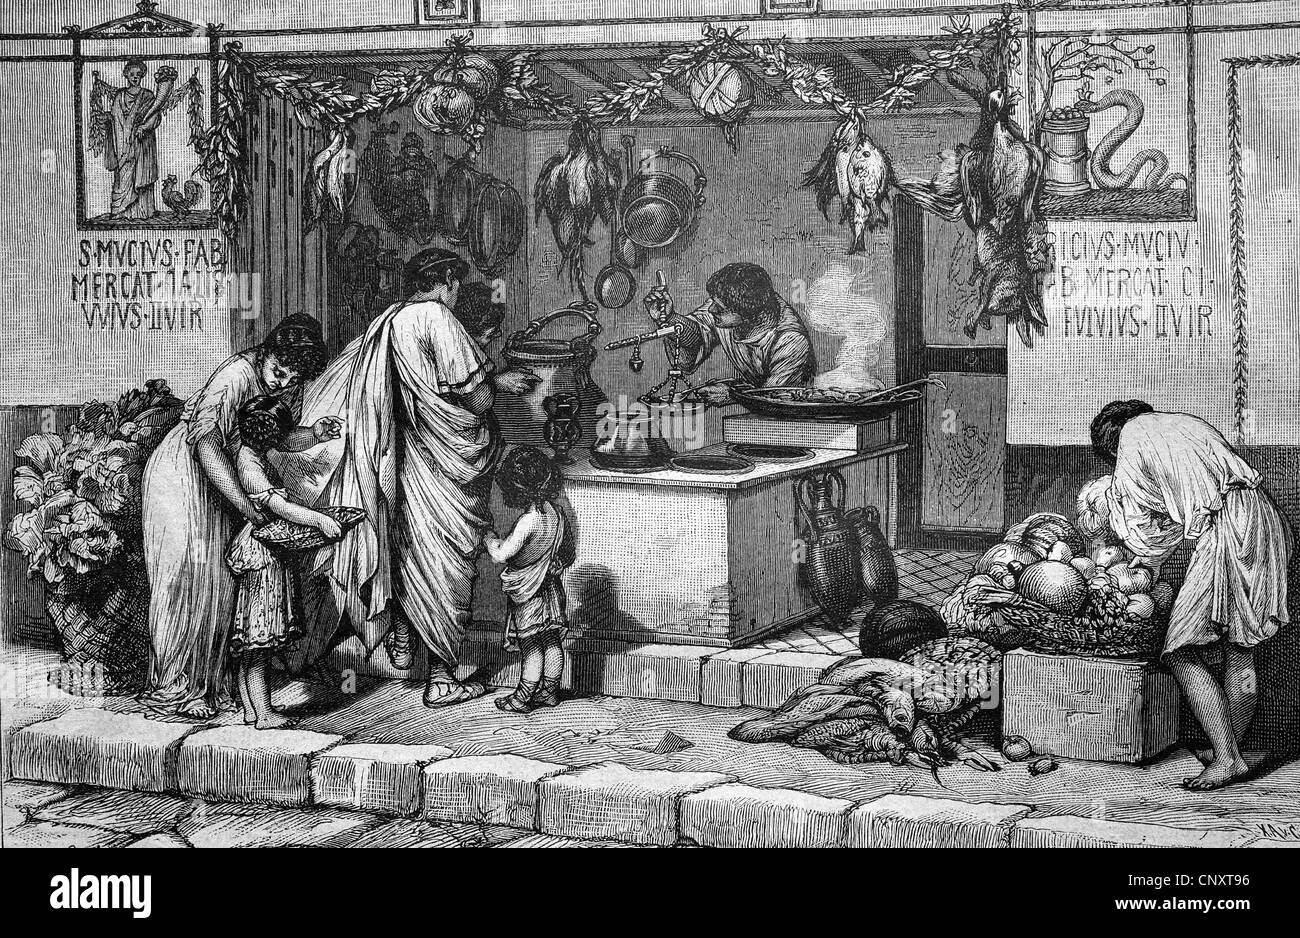 Ancient Roman shop, Rome, Italy, historical engraving, 1888 Stock Photo